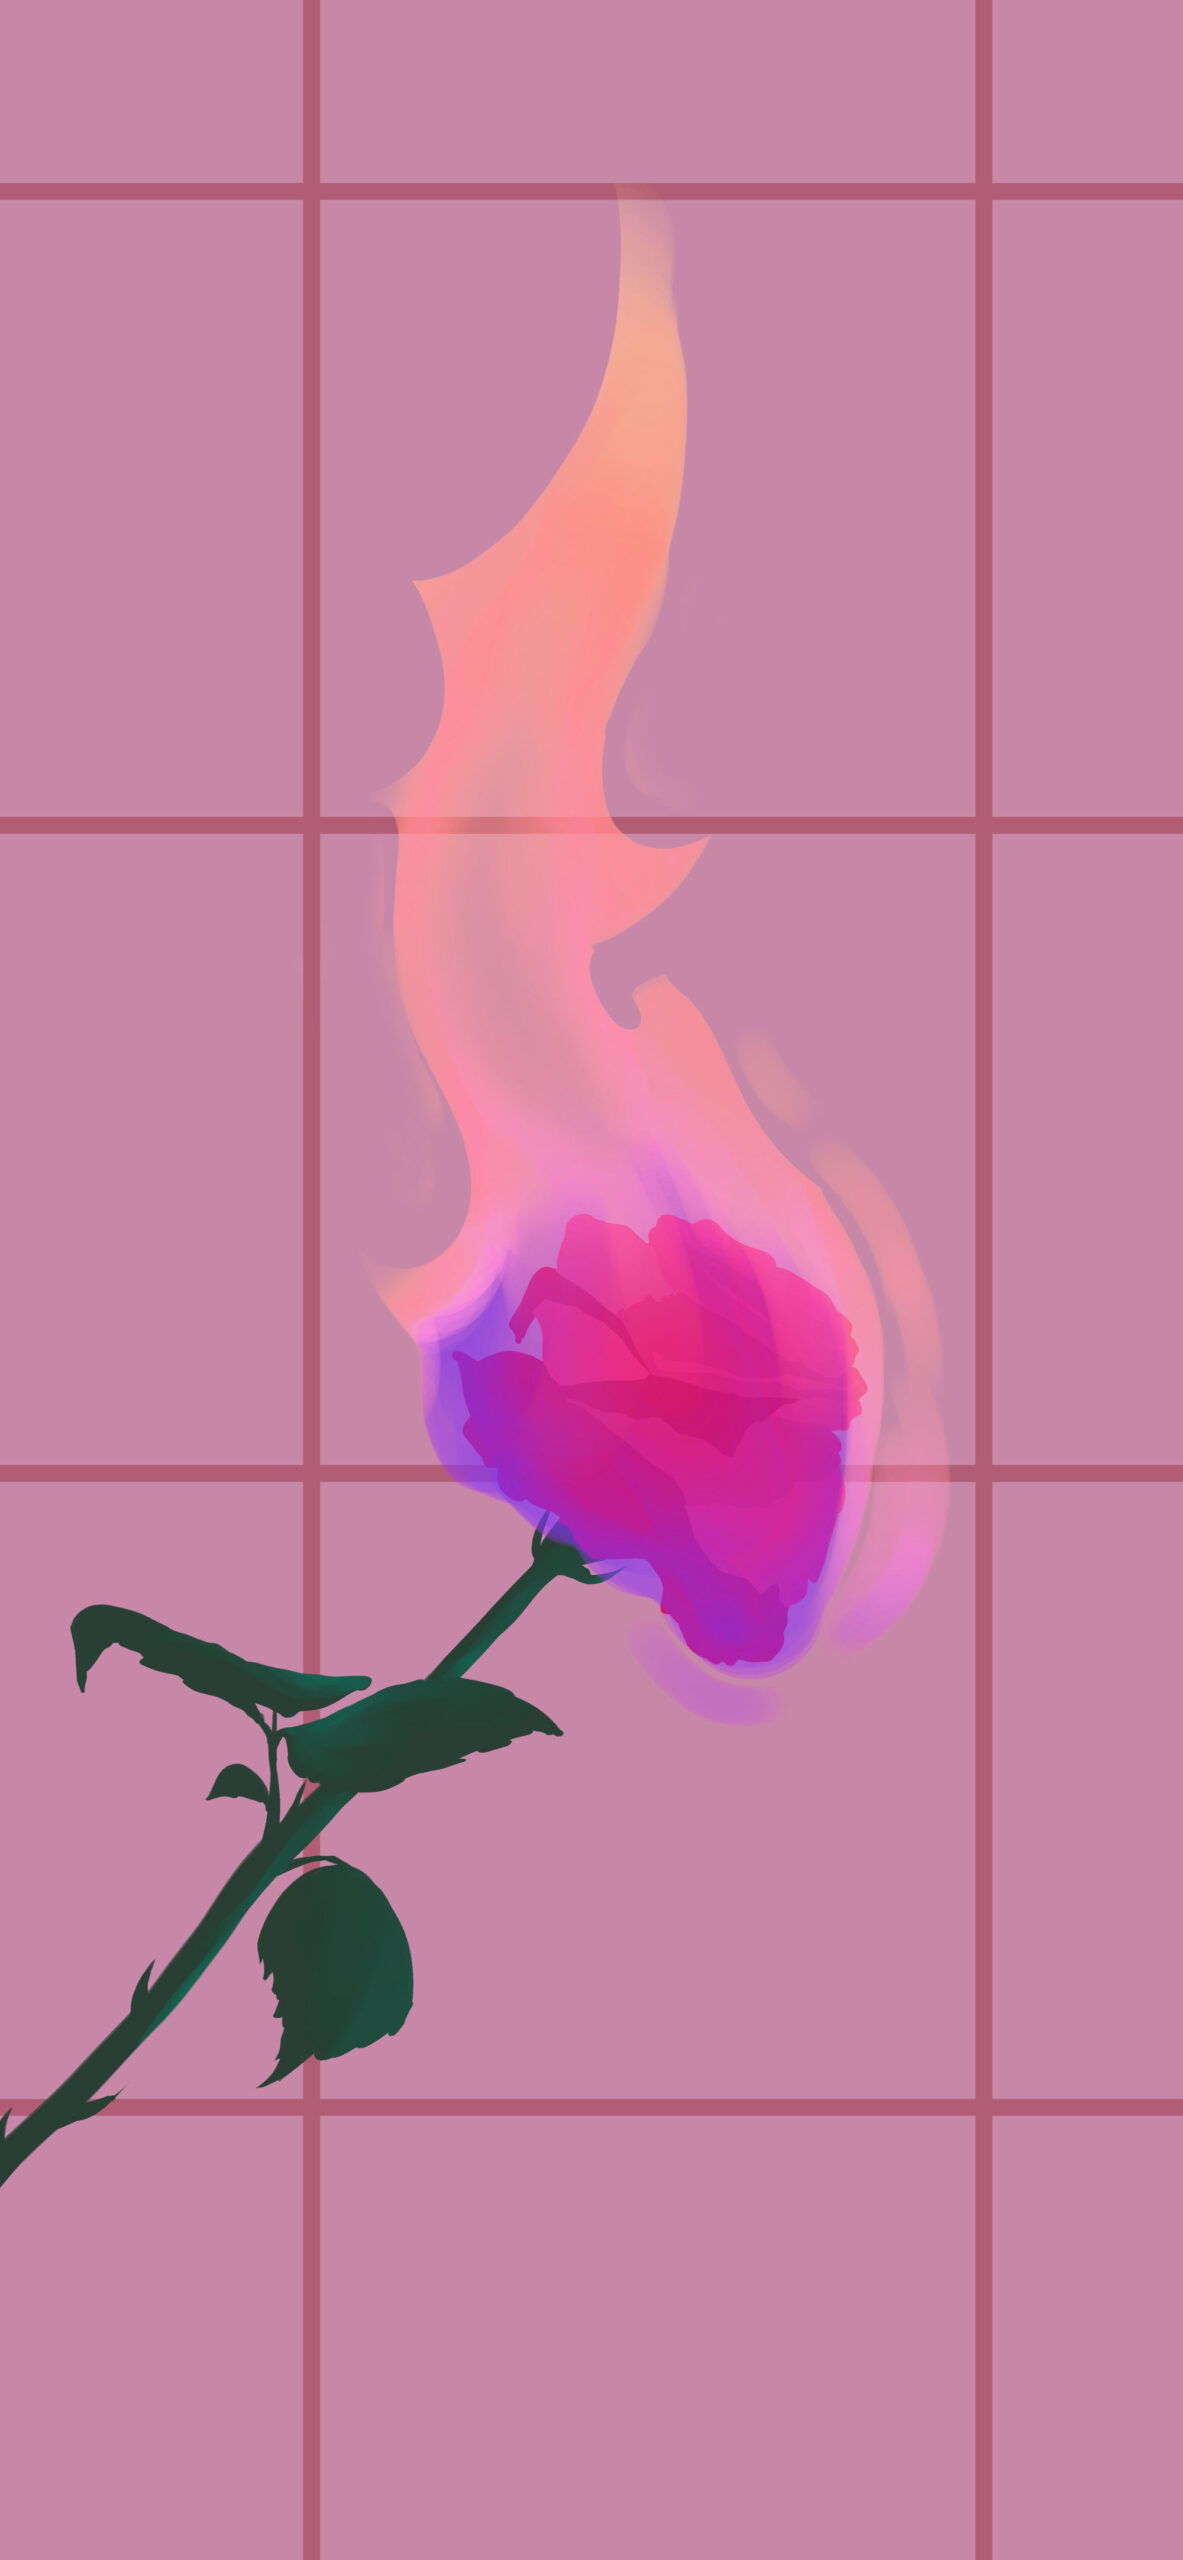 Rose on fire pink wallpaper